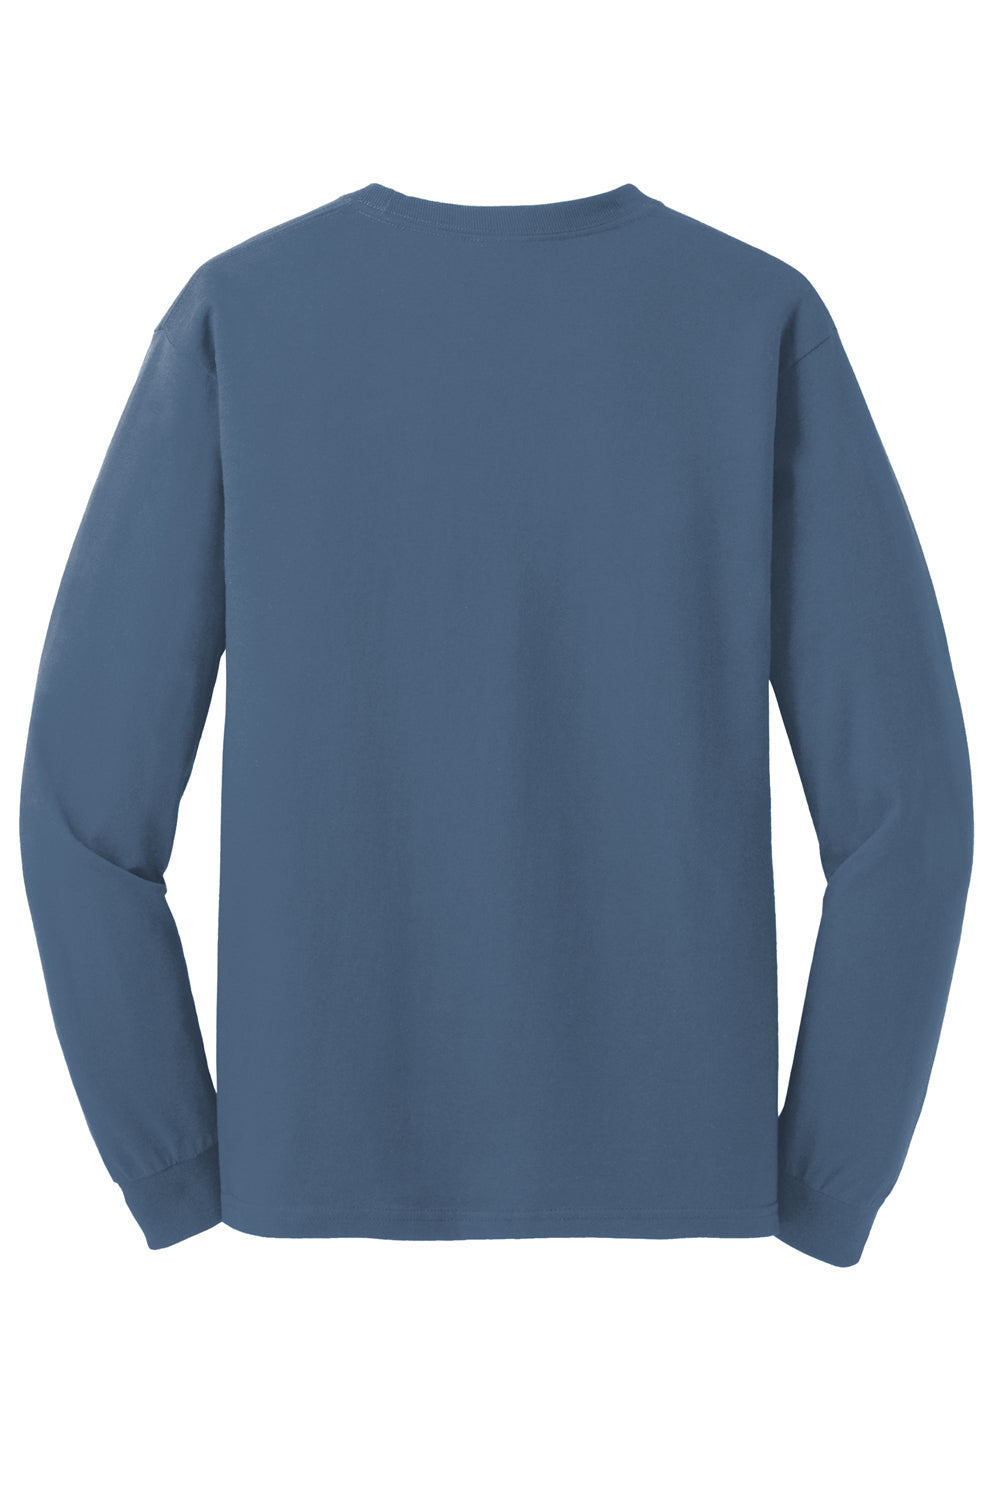 Gildan Mens Long Sleeve Crewneck T-Shirt Indigo Blue Flat Back